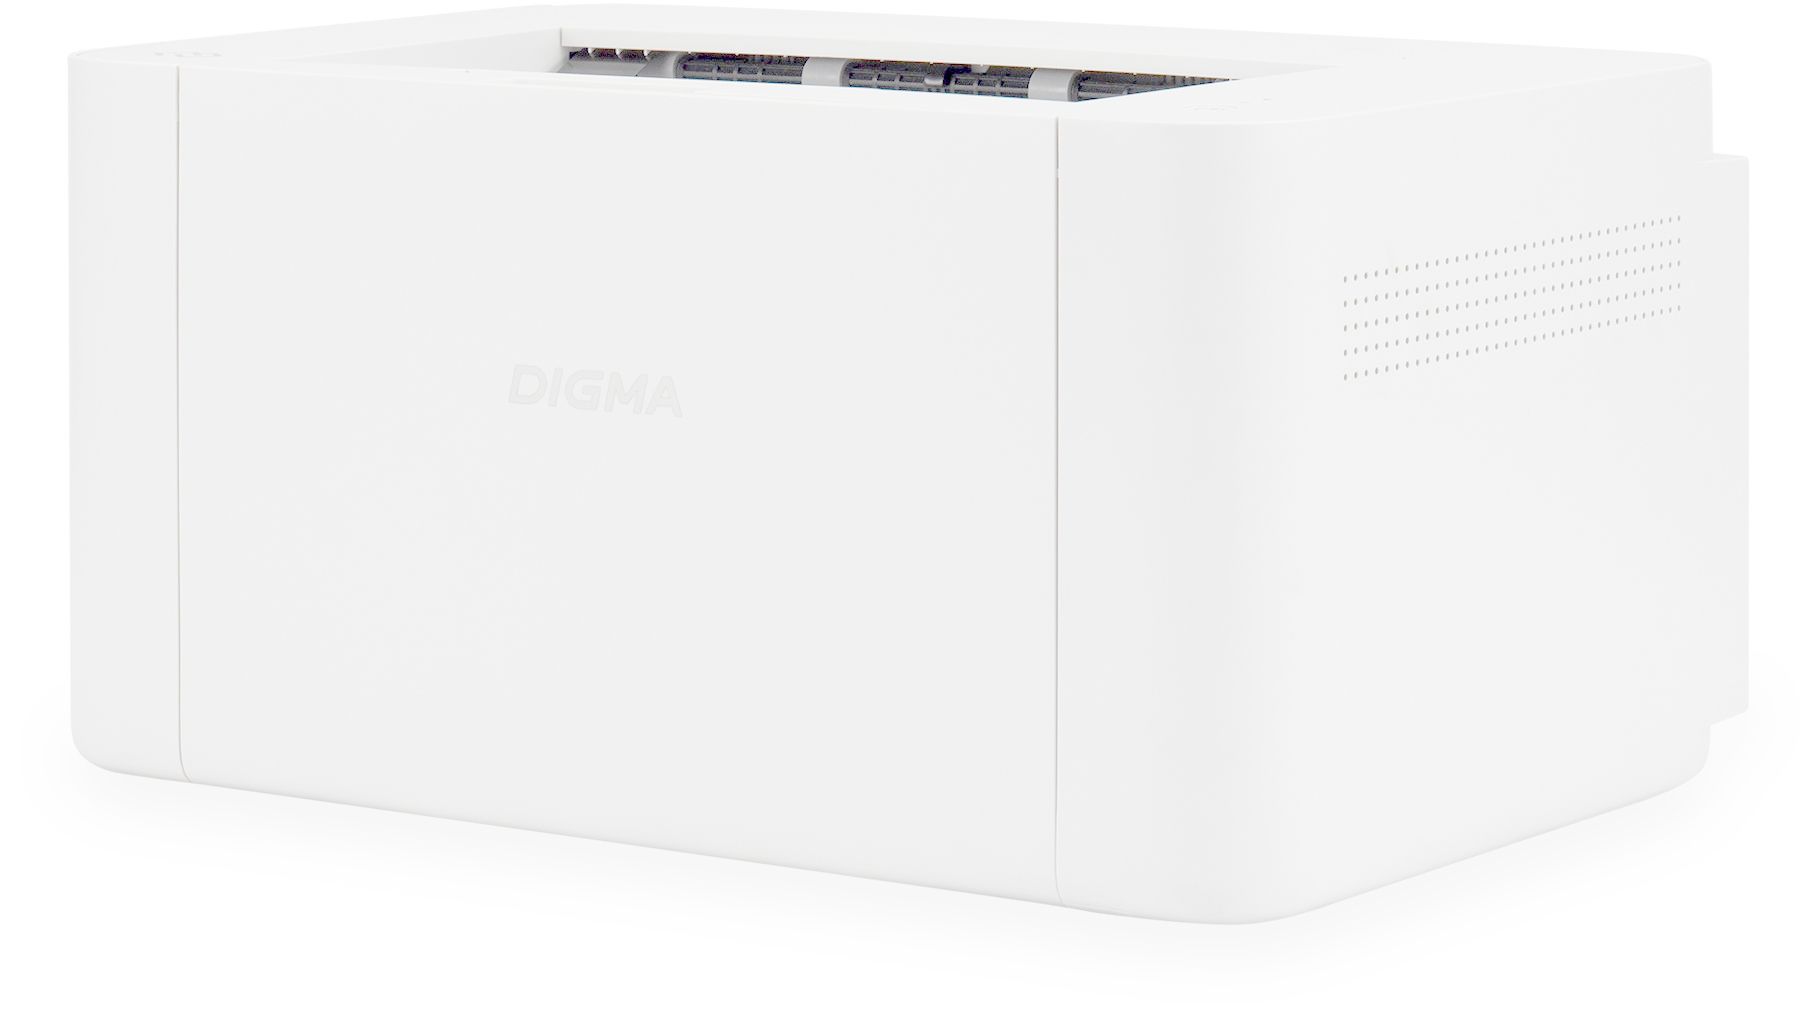 Принтер лазерный Digma DHP-2401W A4 WiFi белый - фото 1